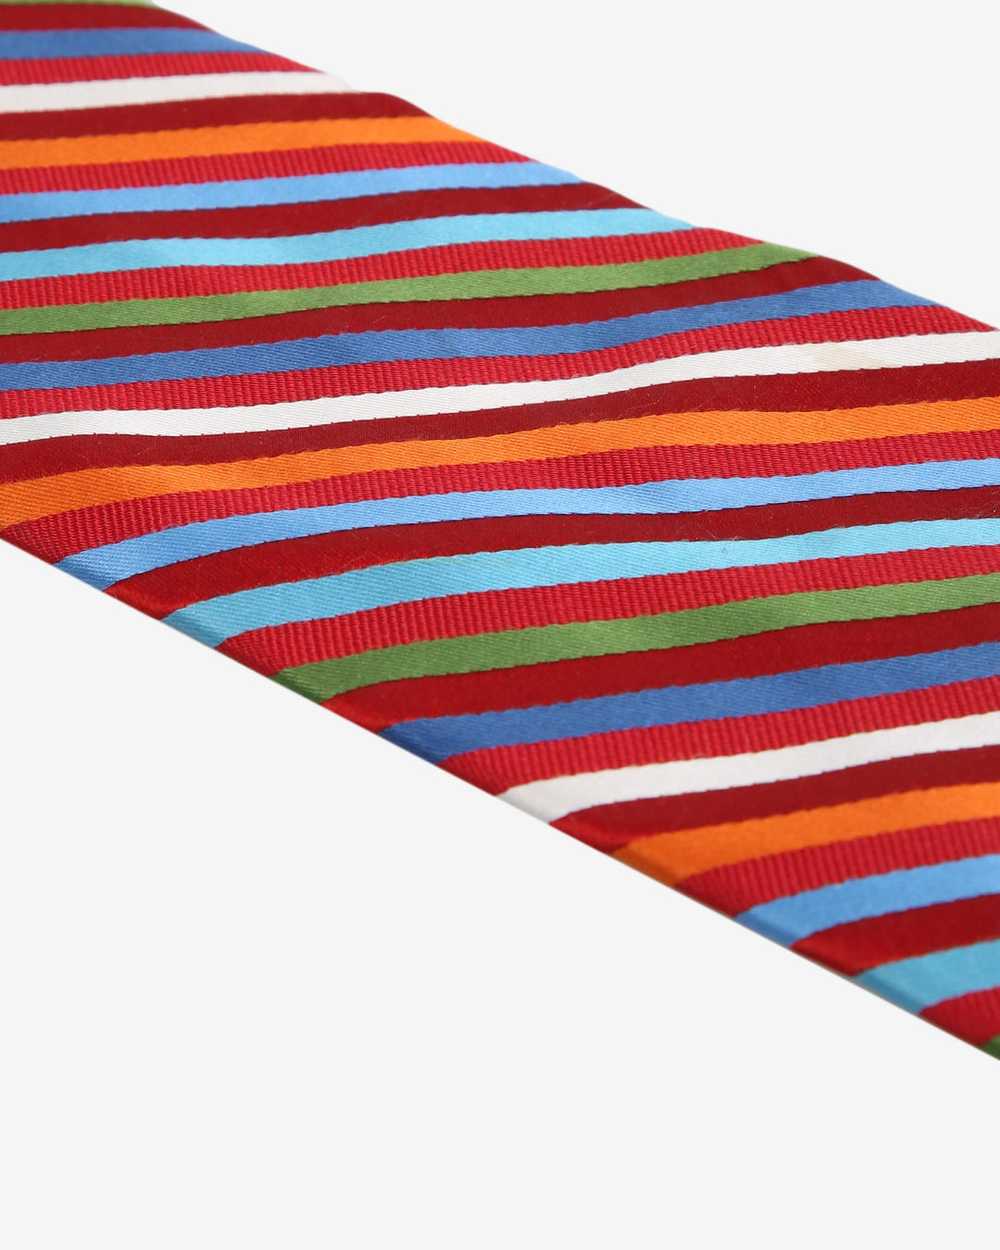 Tommy Hilfiger Multi Coloured Patterned Silk Tie - image 3